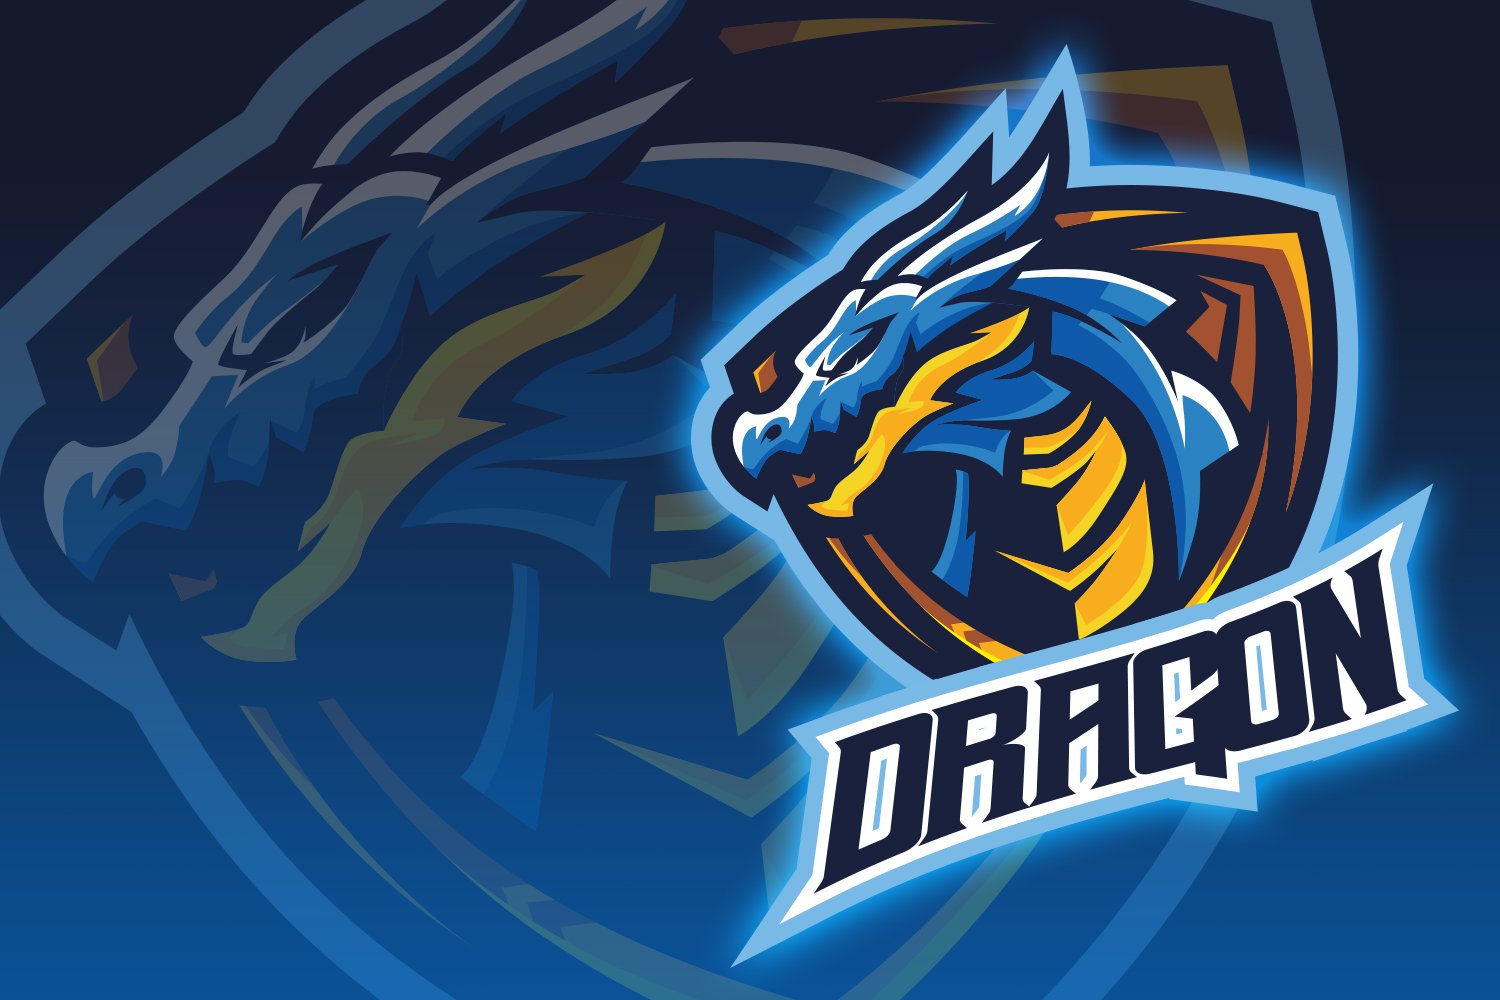 Dragon Esport Logo cover image.